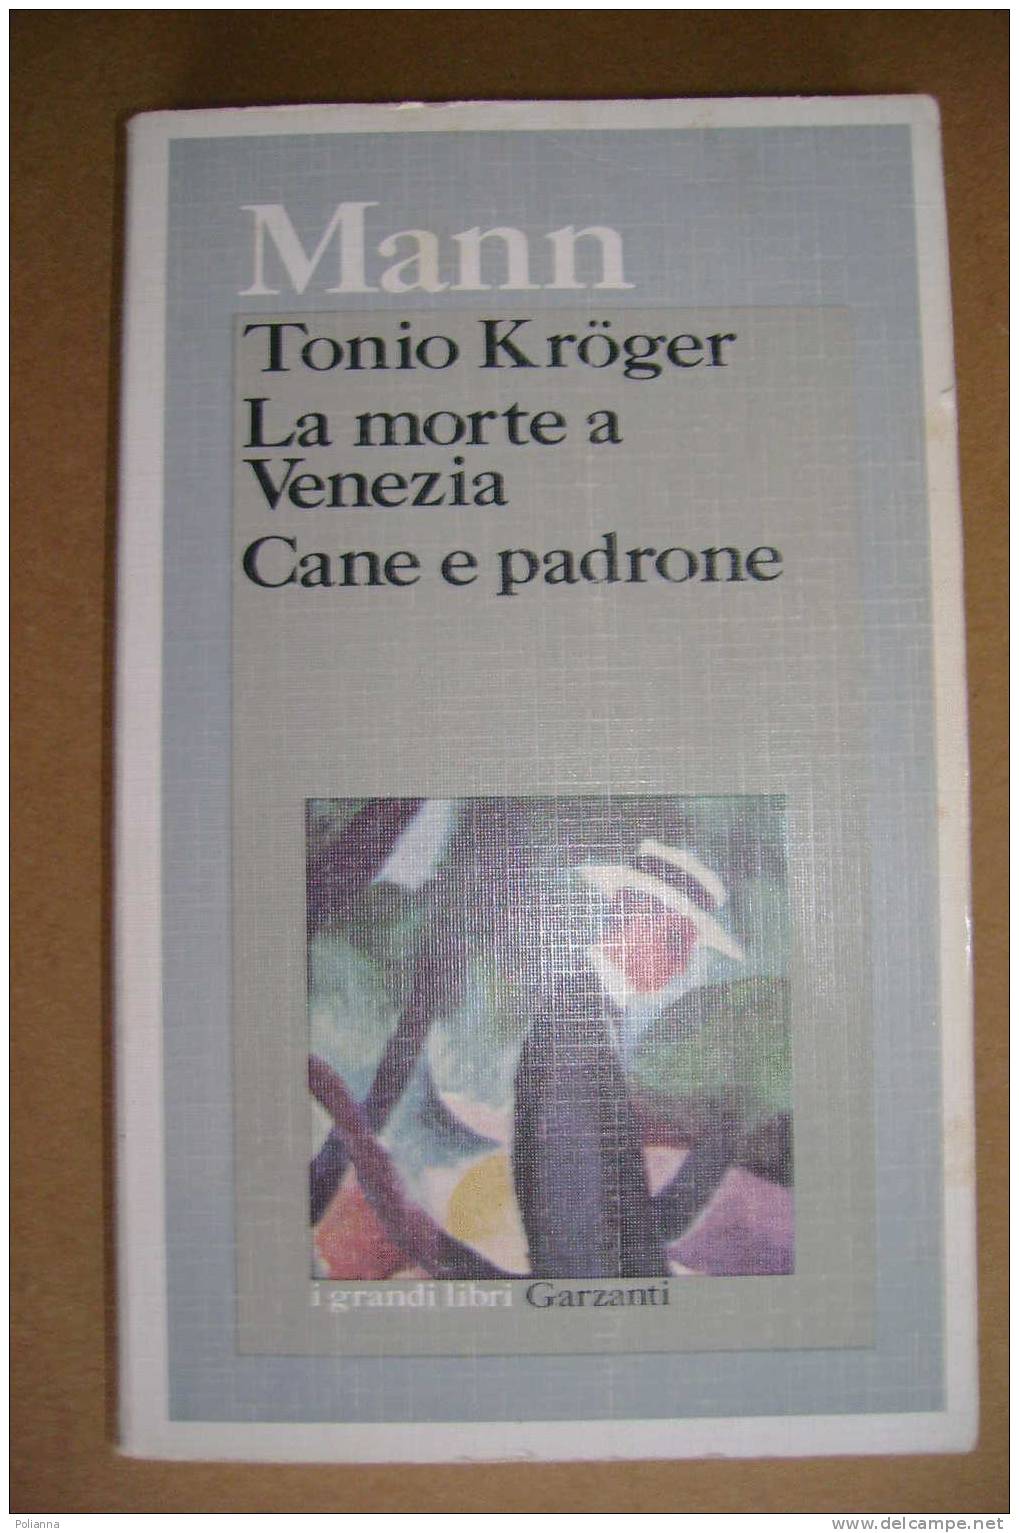 PAH/29 Mann TONIO KROGER - LA MORTE A VENEZIA - CANE E PADRONE I Grandi Libri  Garzanti 1992 - Novelle, Racconti